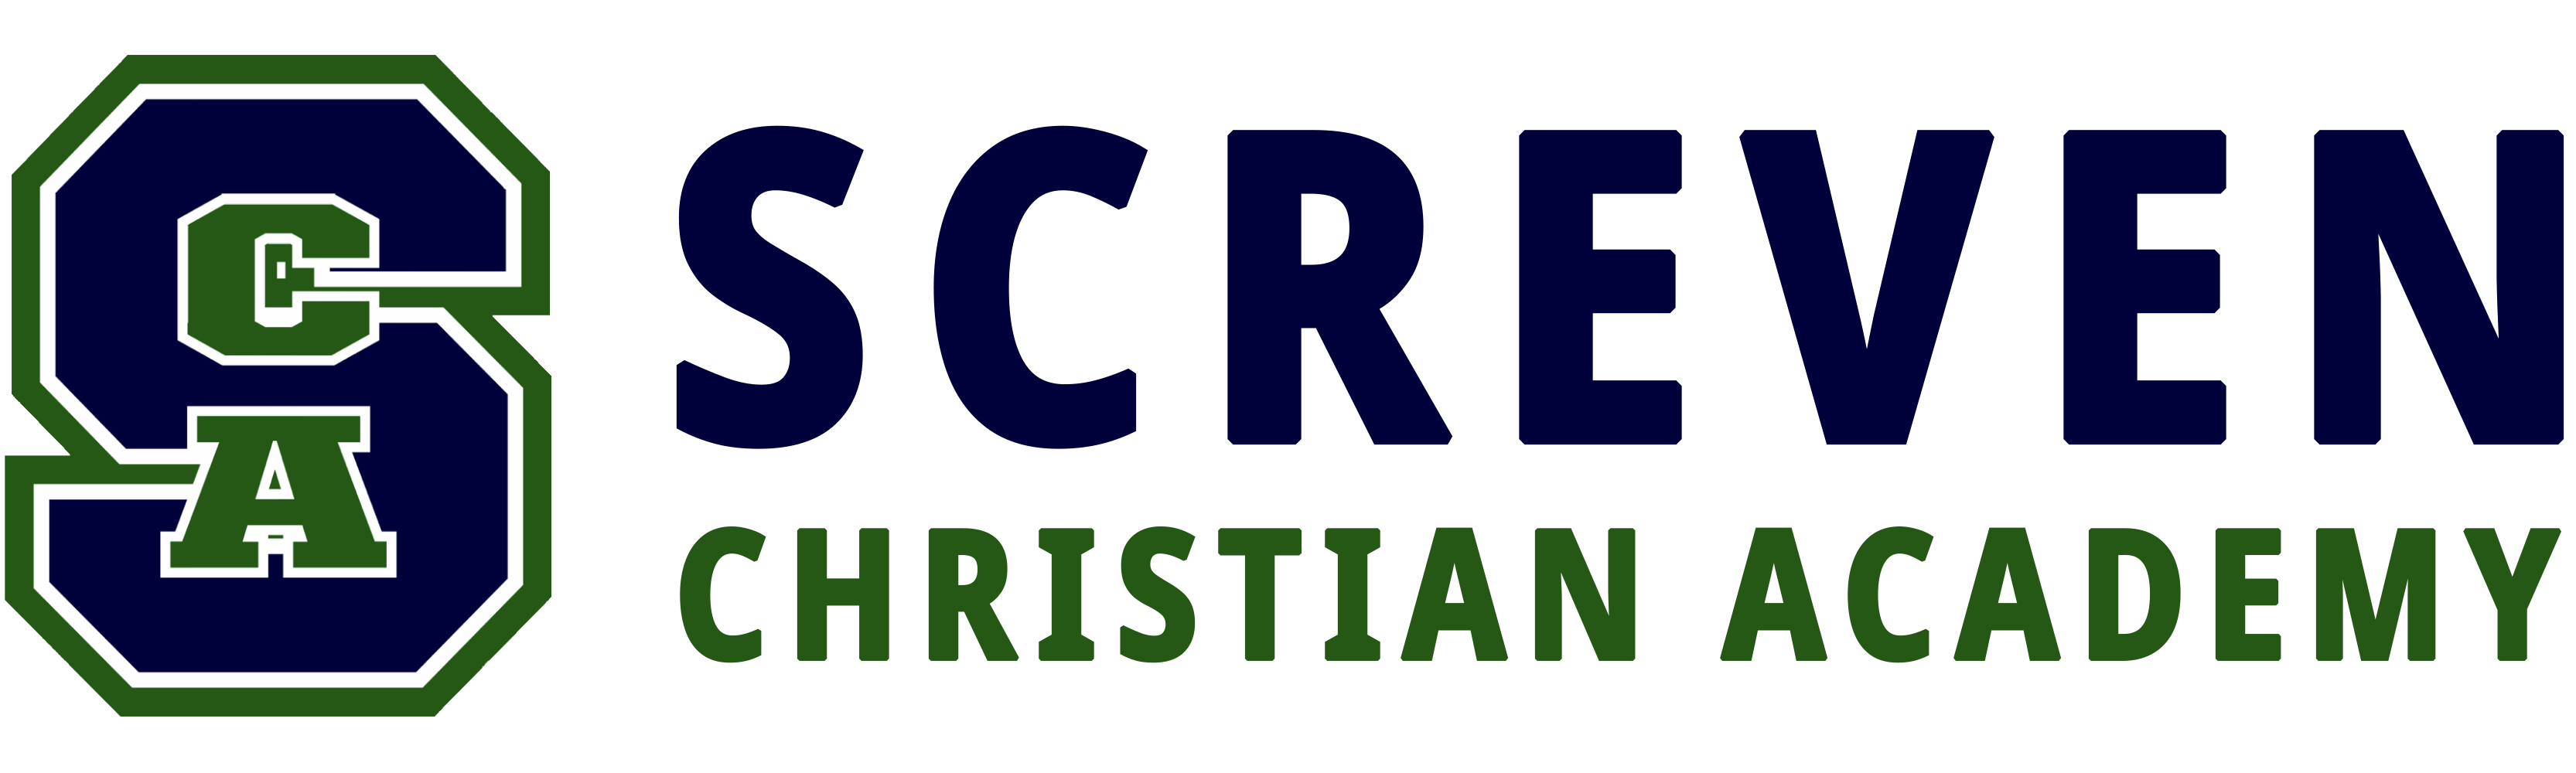 Logo for Screven Christian Academy